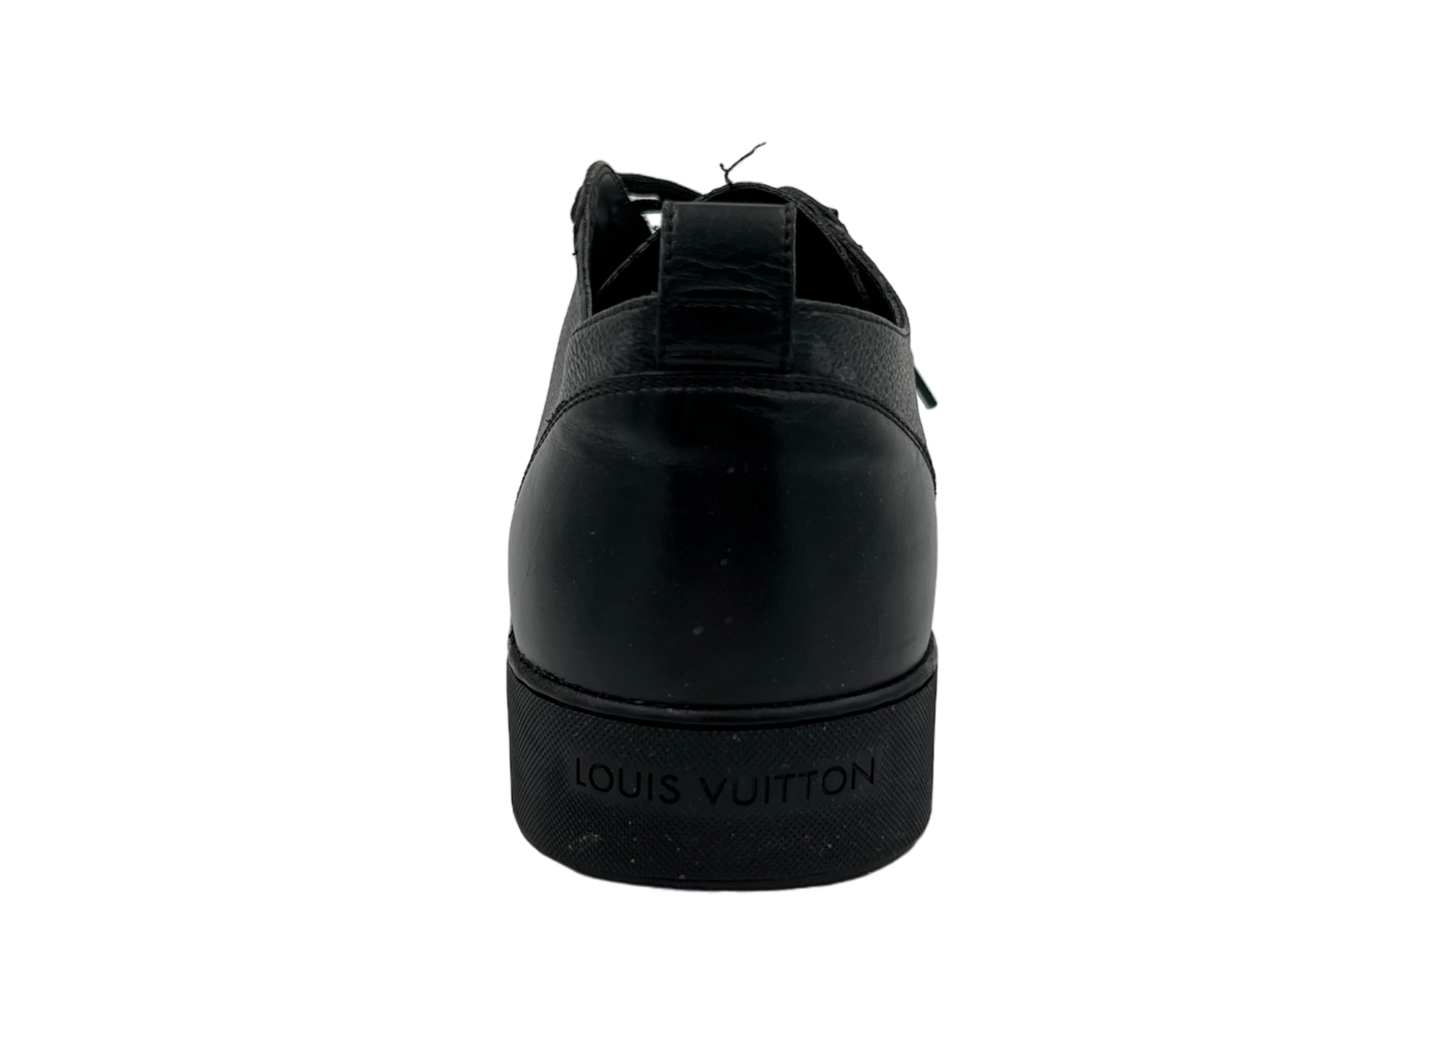 Louis Vuitton Match Up Monogram COND 9.5/10 (NO BOX)